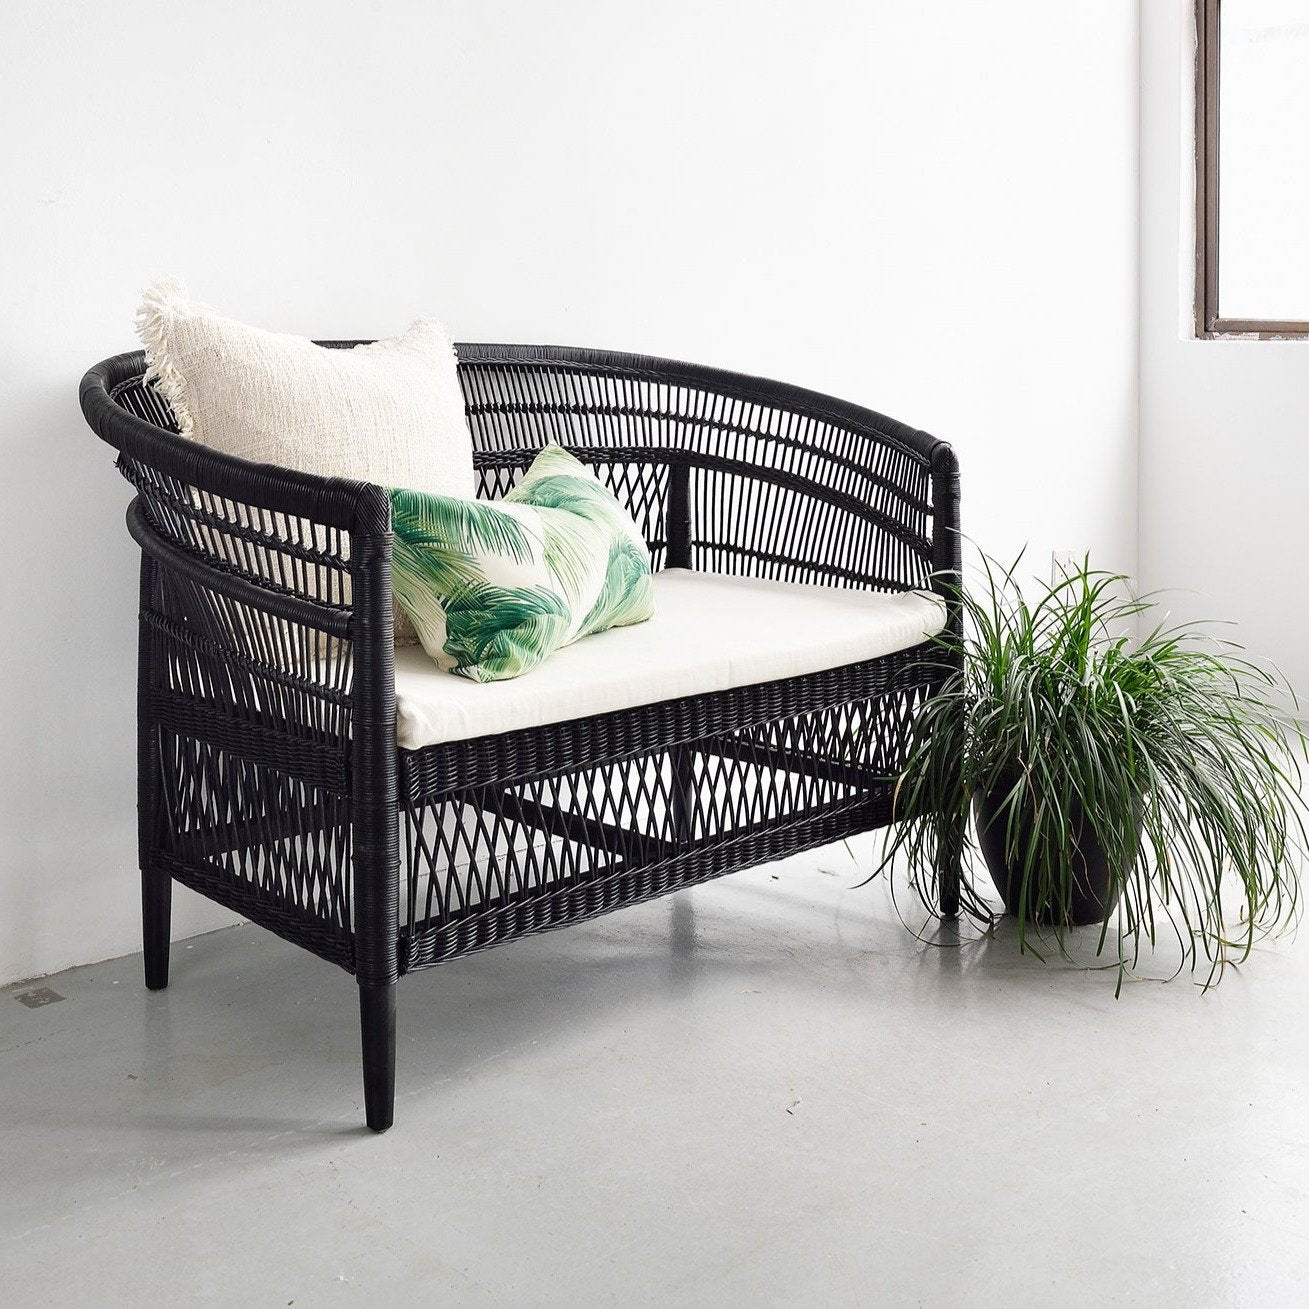 Malawi Sofa - Black - One size - Furniture